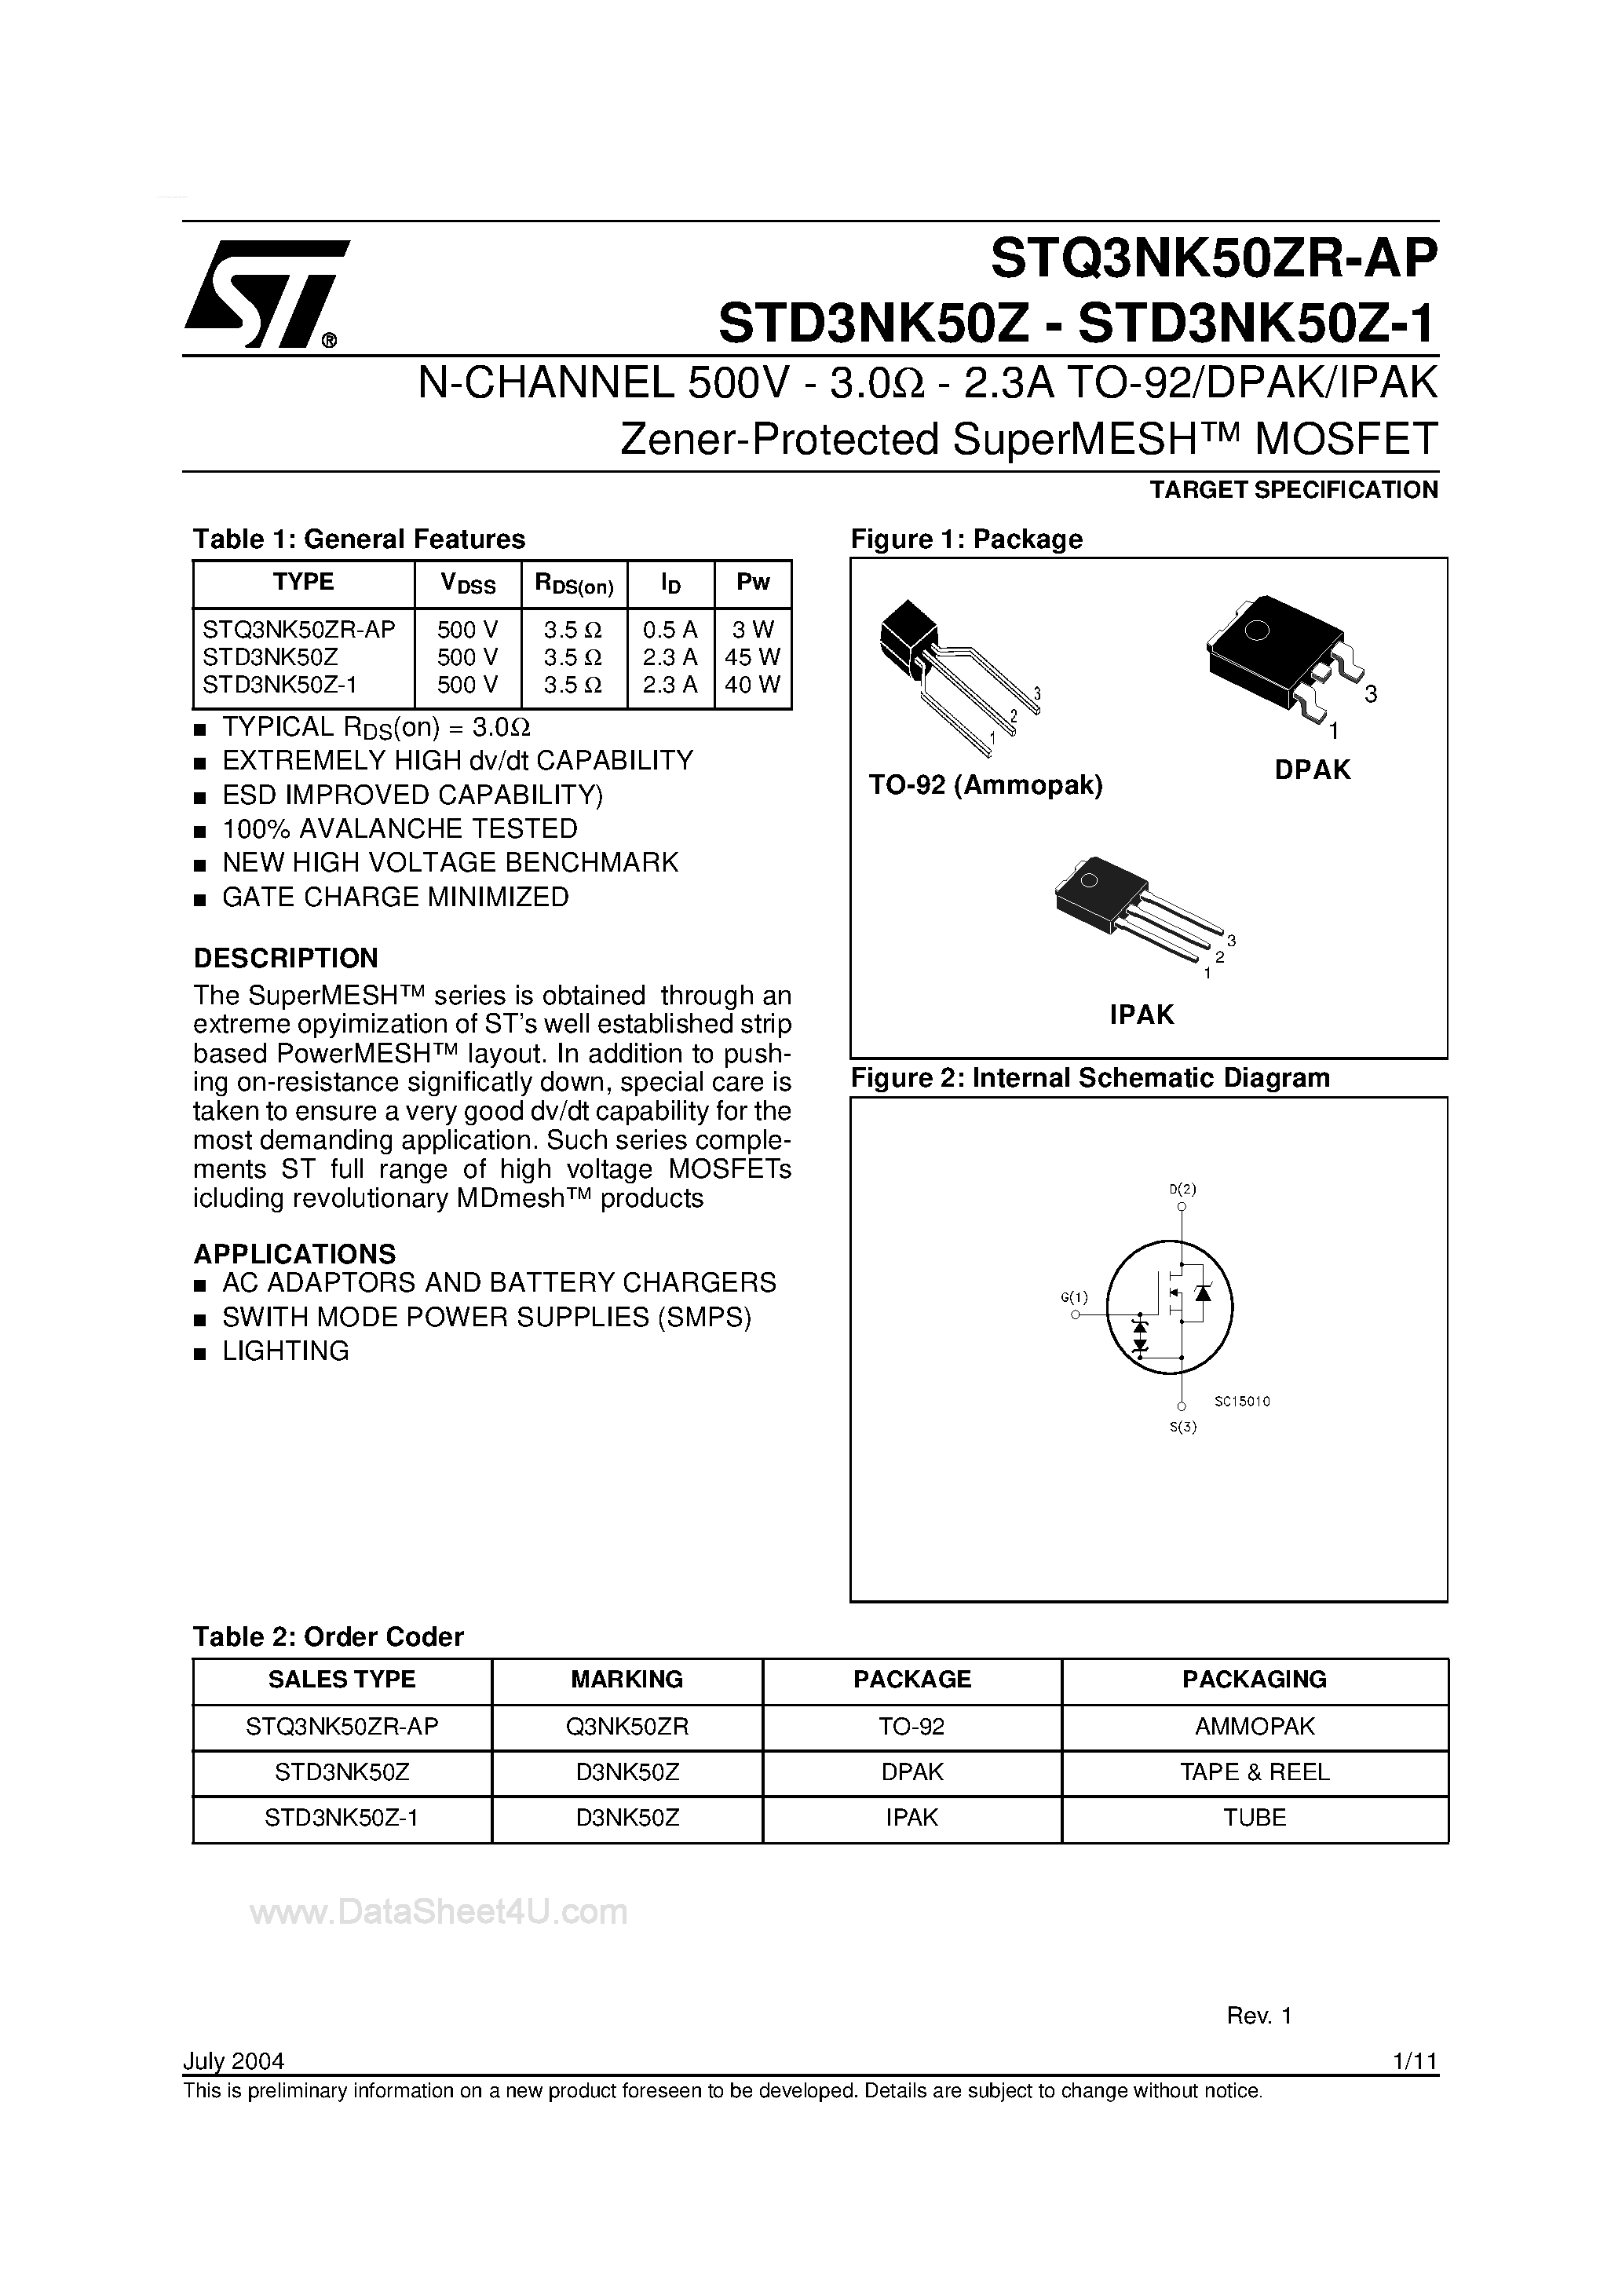 Datasheet STQ3NK50ZR-AP - N-CHANNEL MOSFET page 1